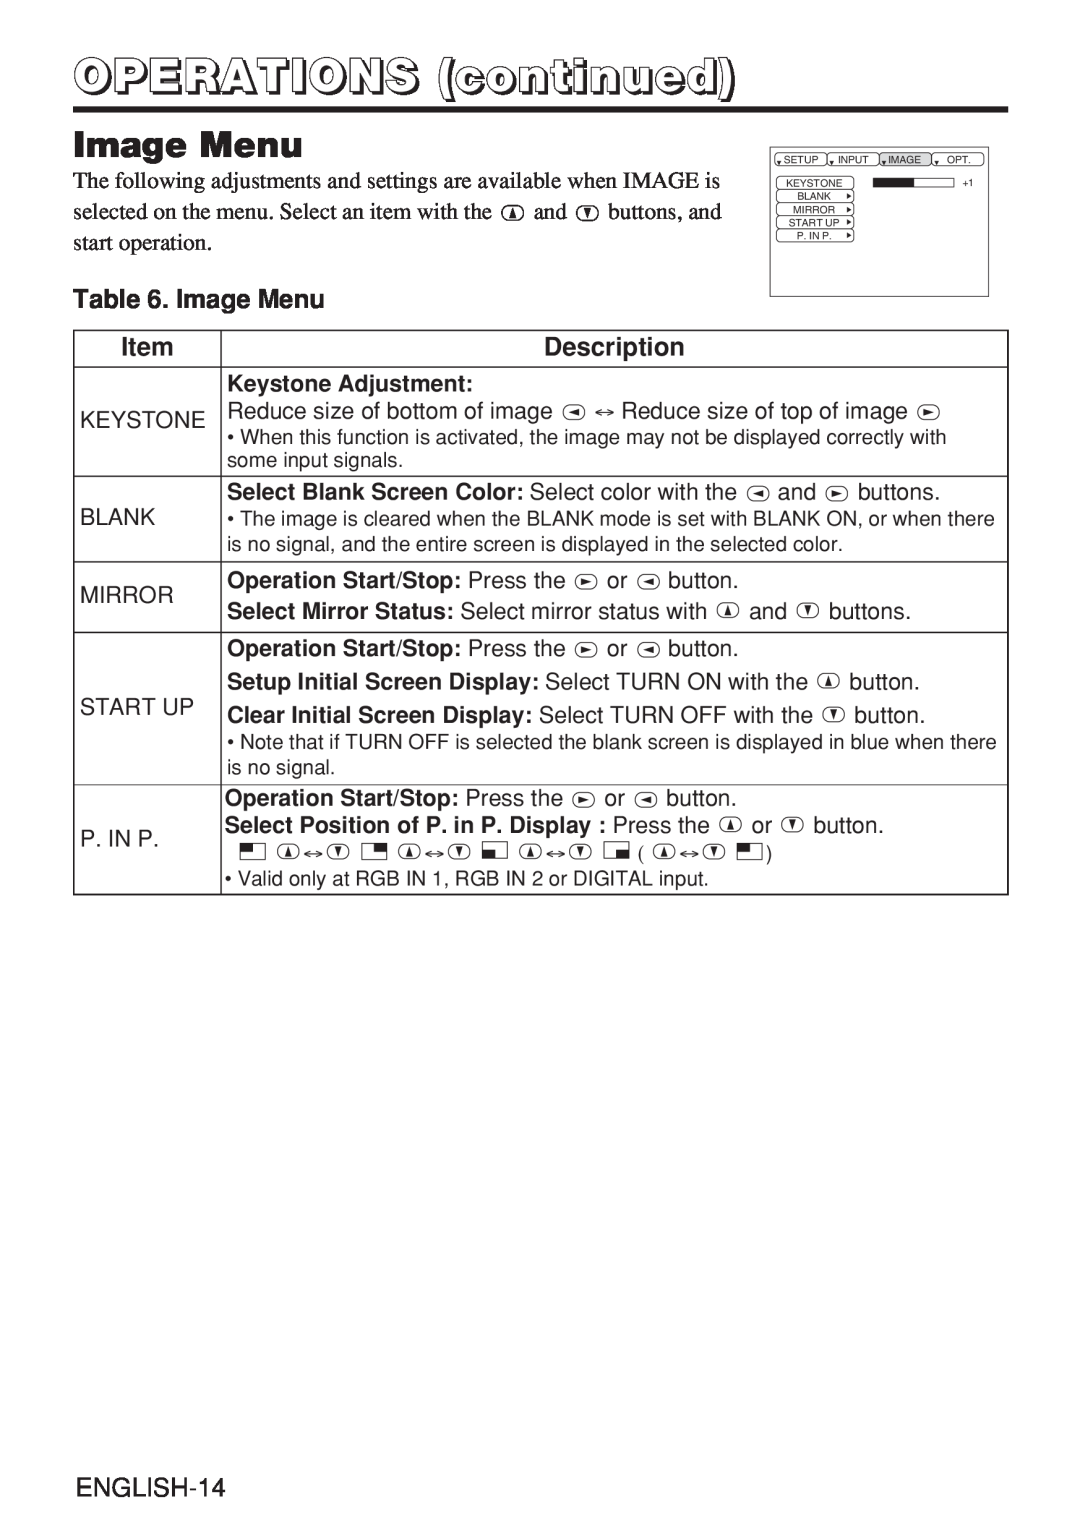 Hitachi CP-X980W user manual Image Menu, OPERATIONS continued, Description, ENGLISH-14 